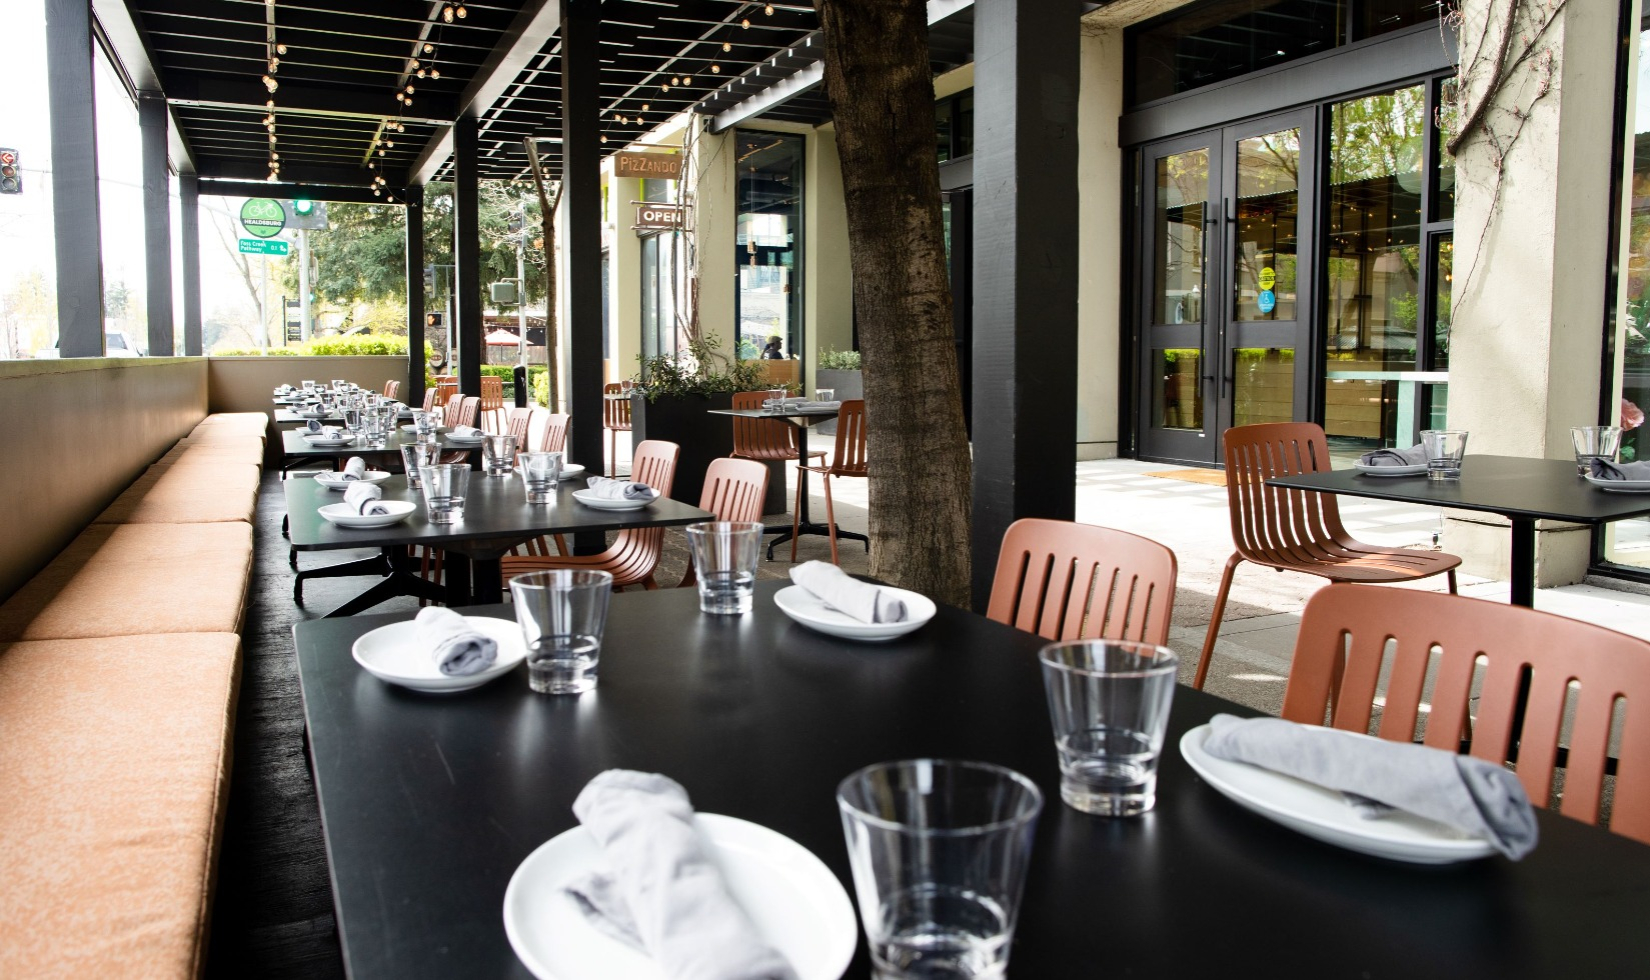 restaurant tables on outdoor dining spacing across sidewalk from pizzando restaurant main entrance